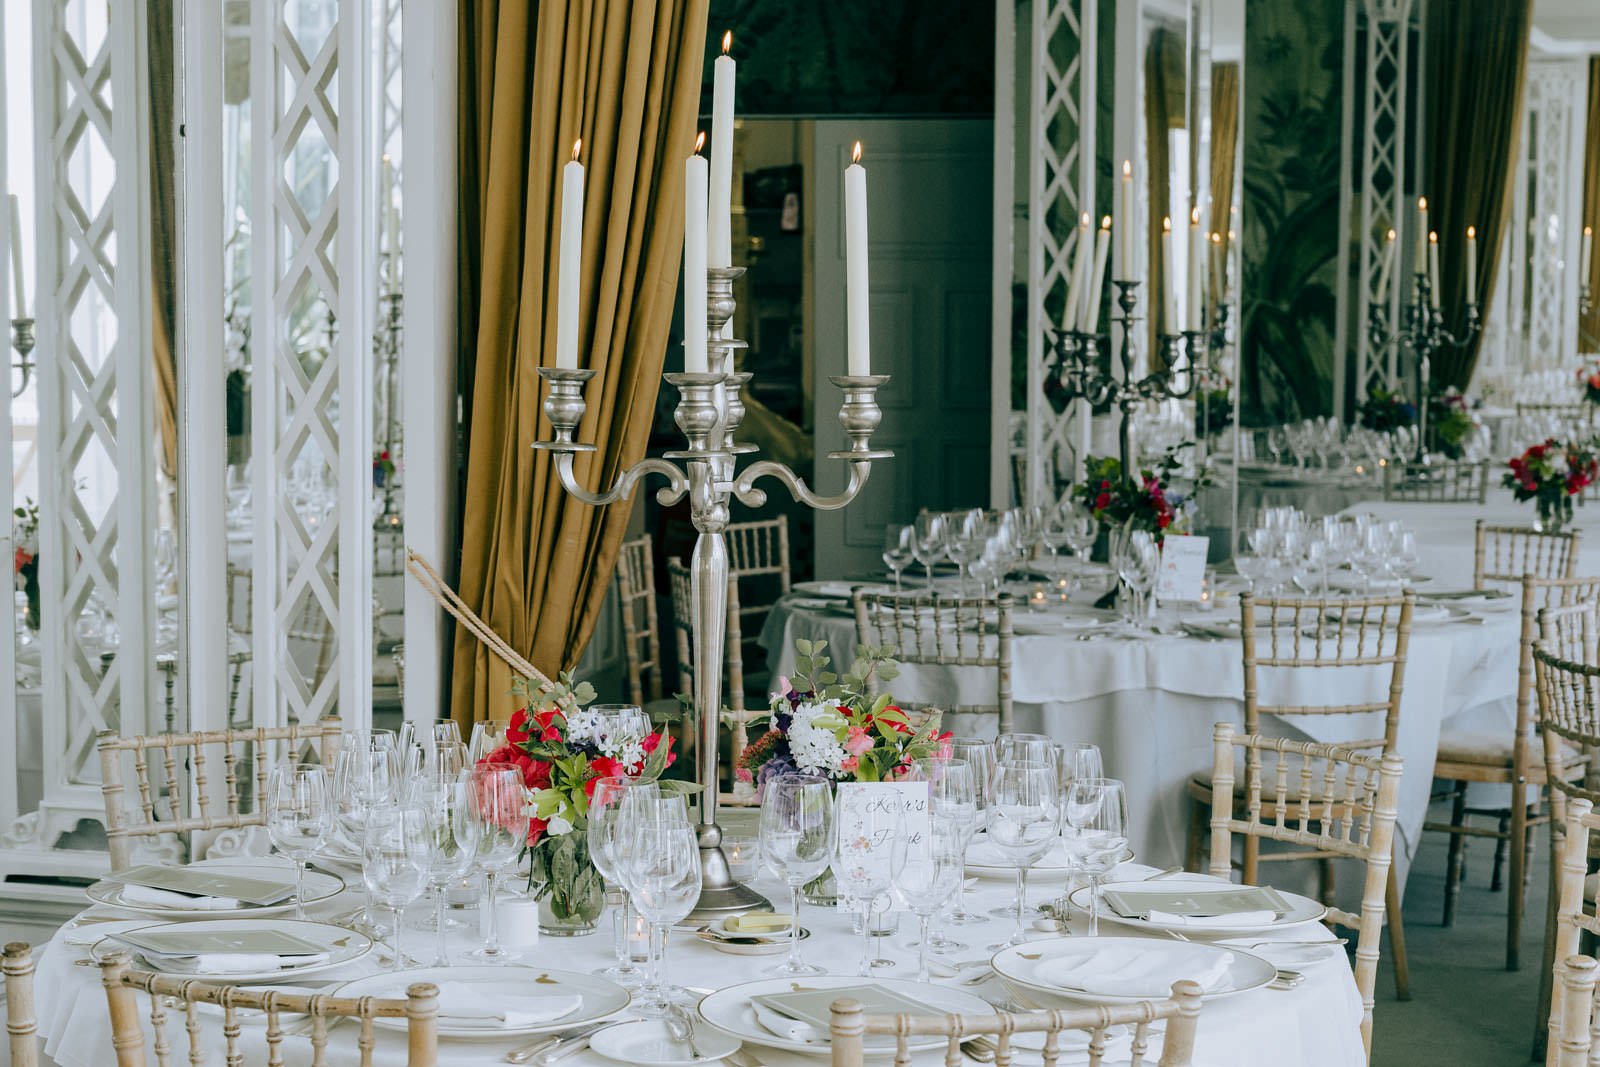 Marlfield_House-best-wedding-venues-Ireland-16.jpg